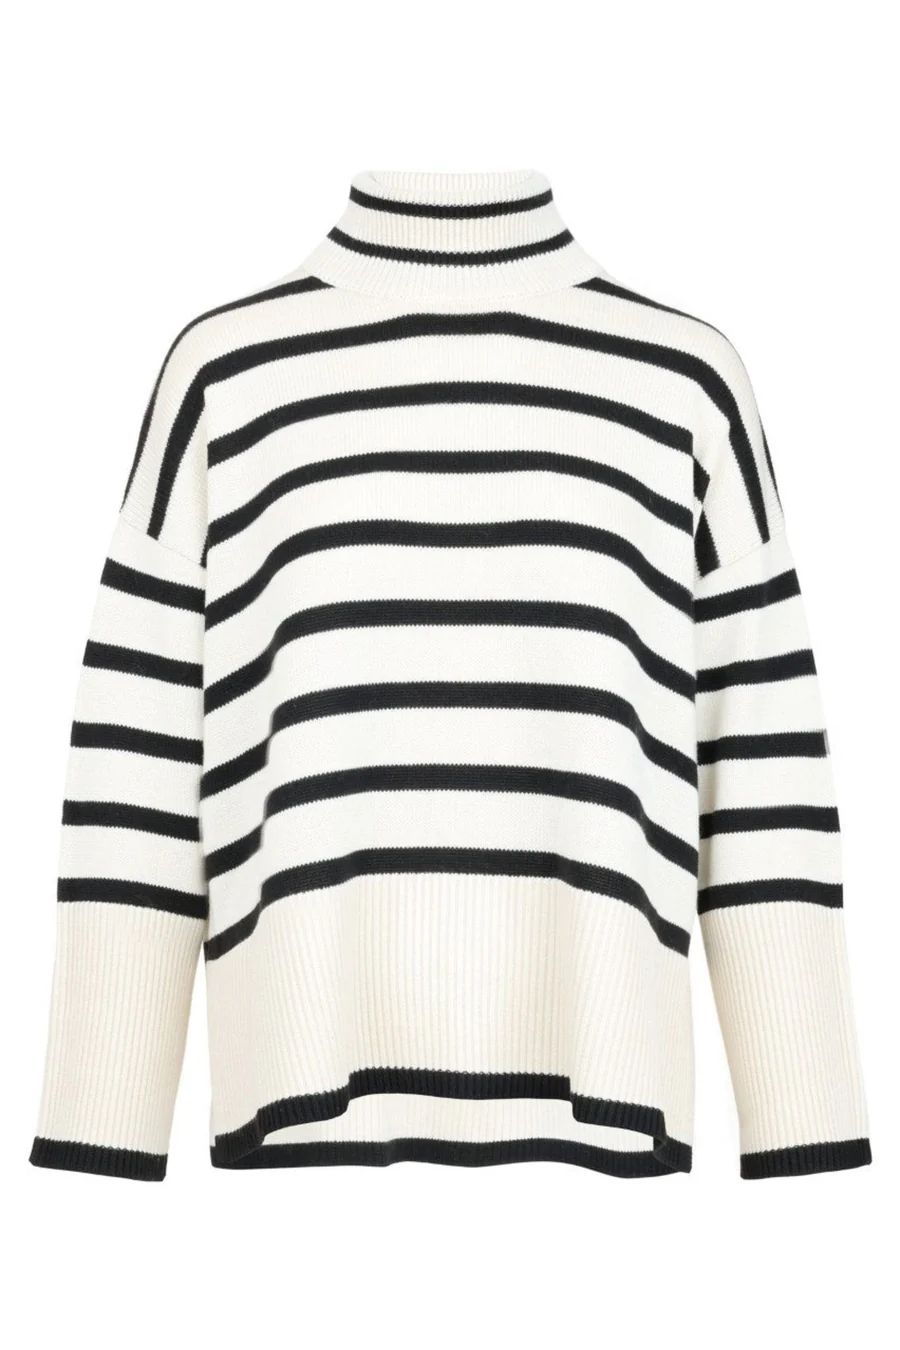 The Striped Sweater in White | Popski London